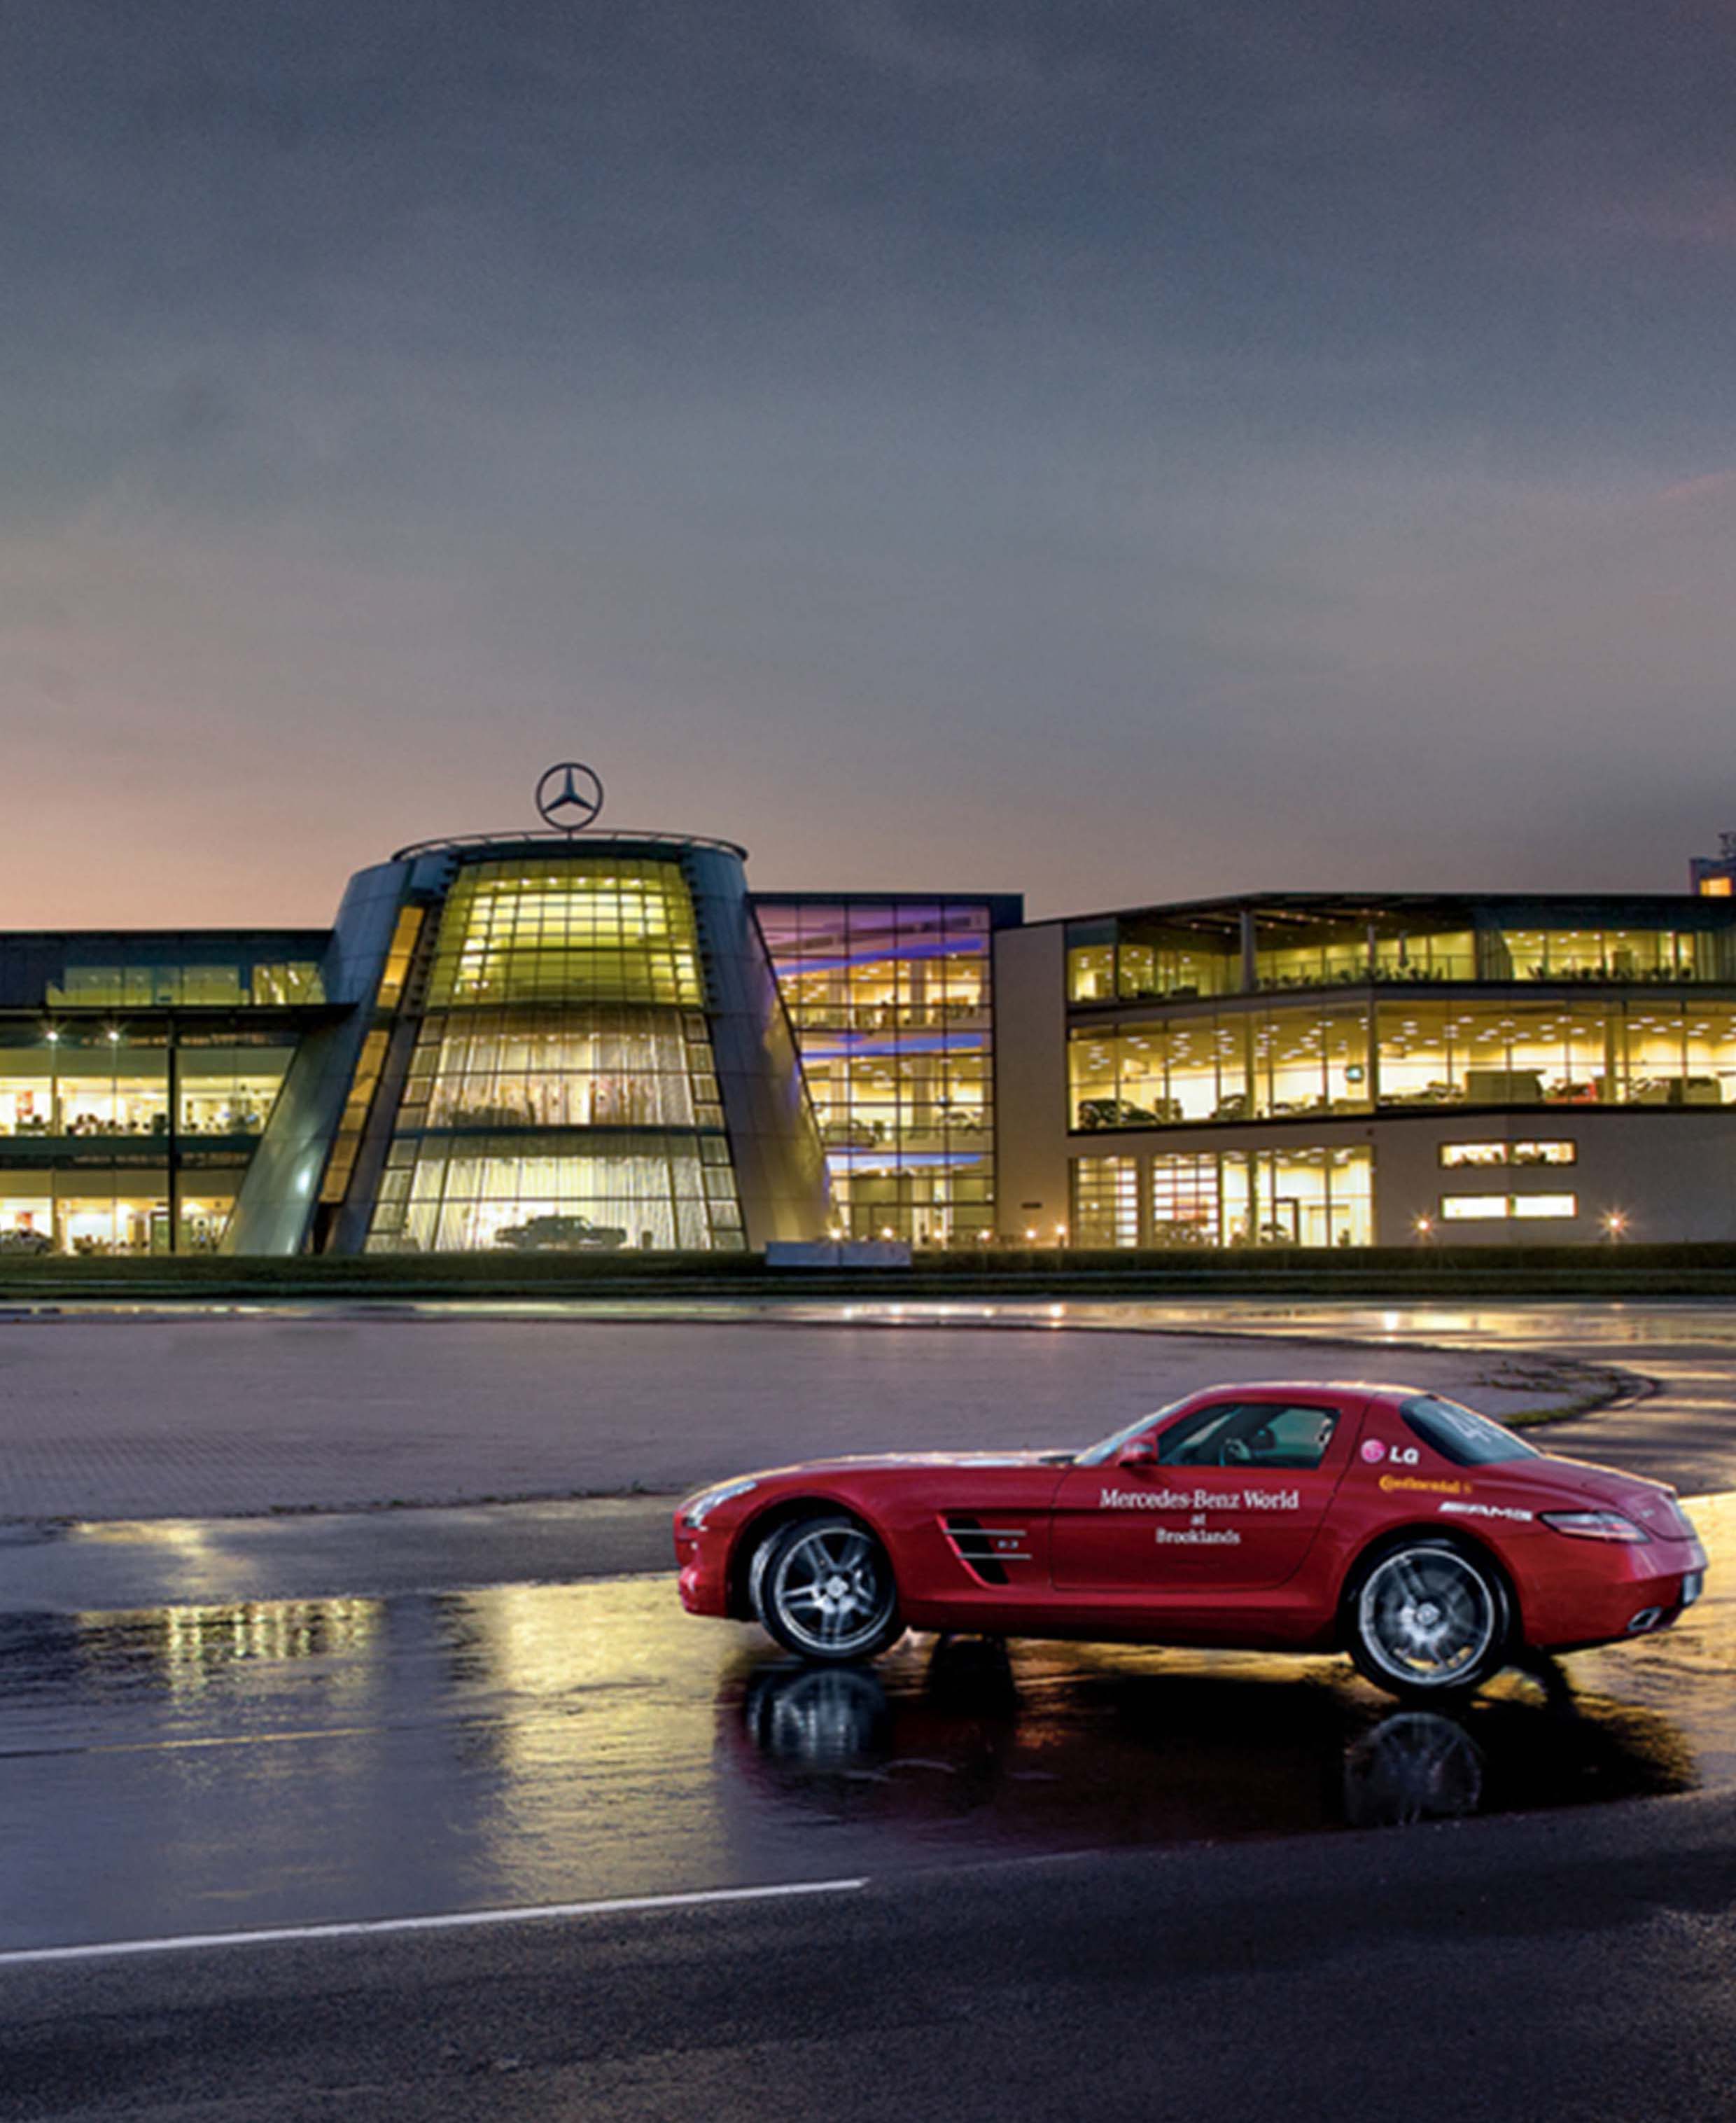 The Brooklands Velocity; Mercedes-Benz World